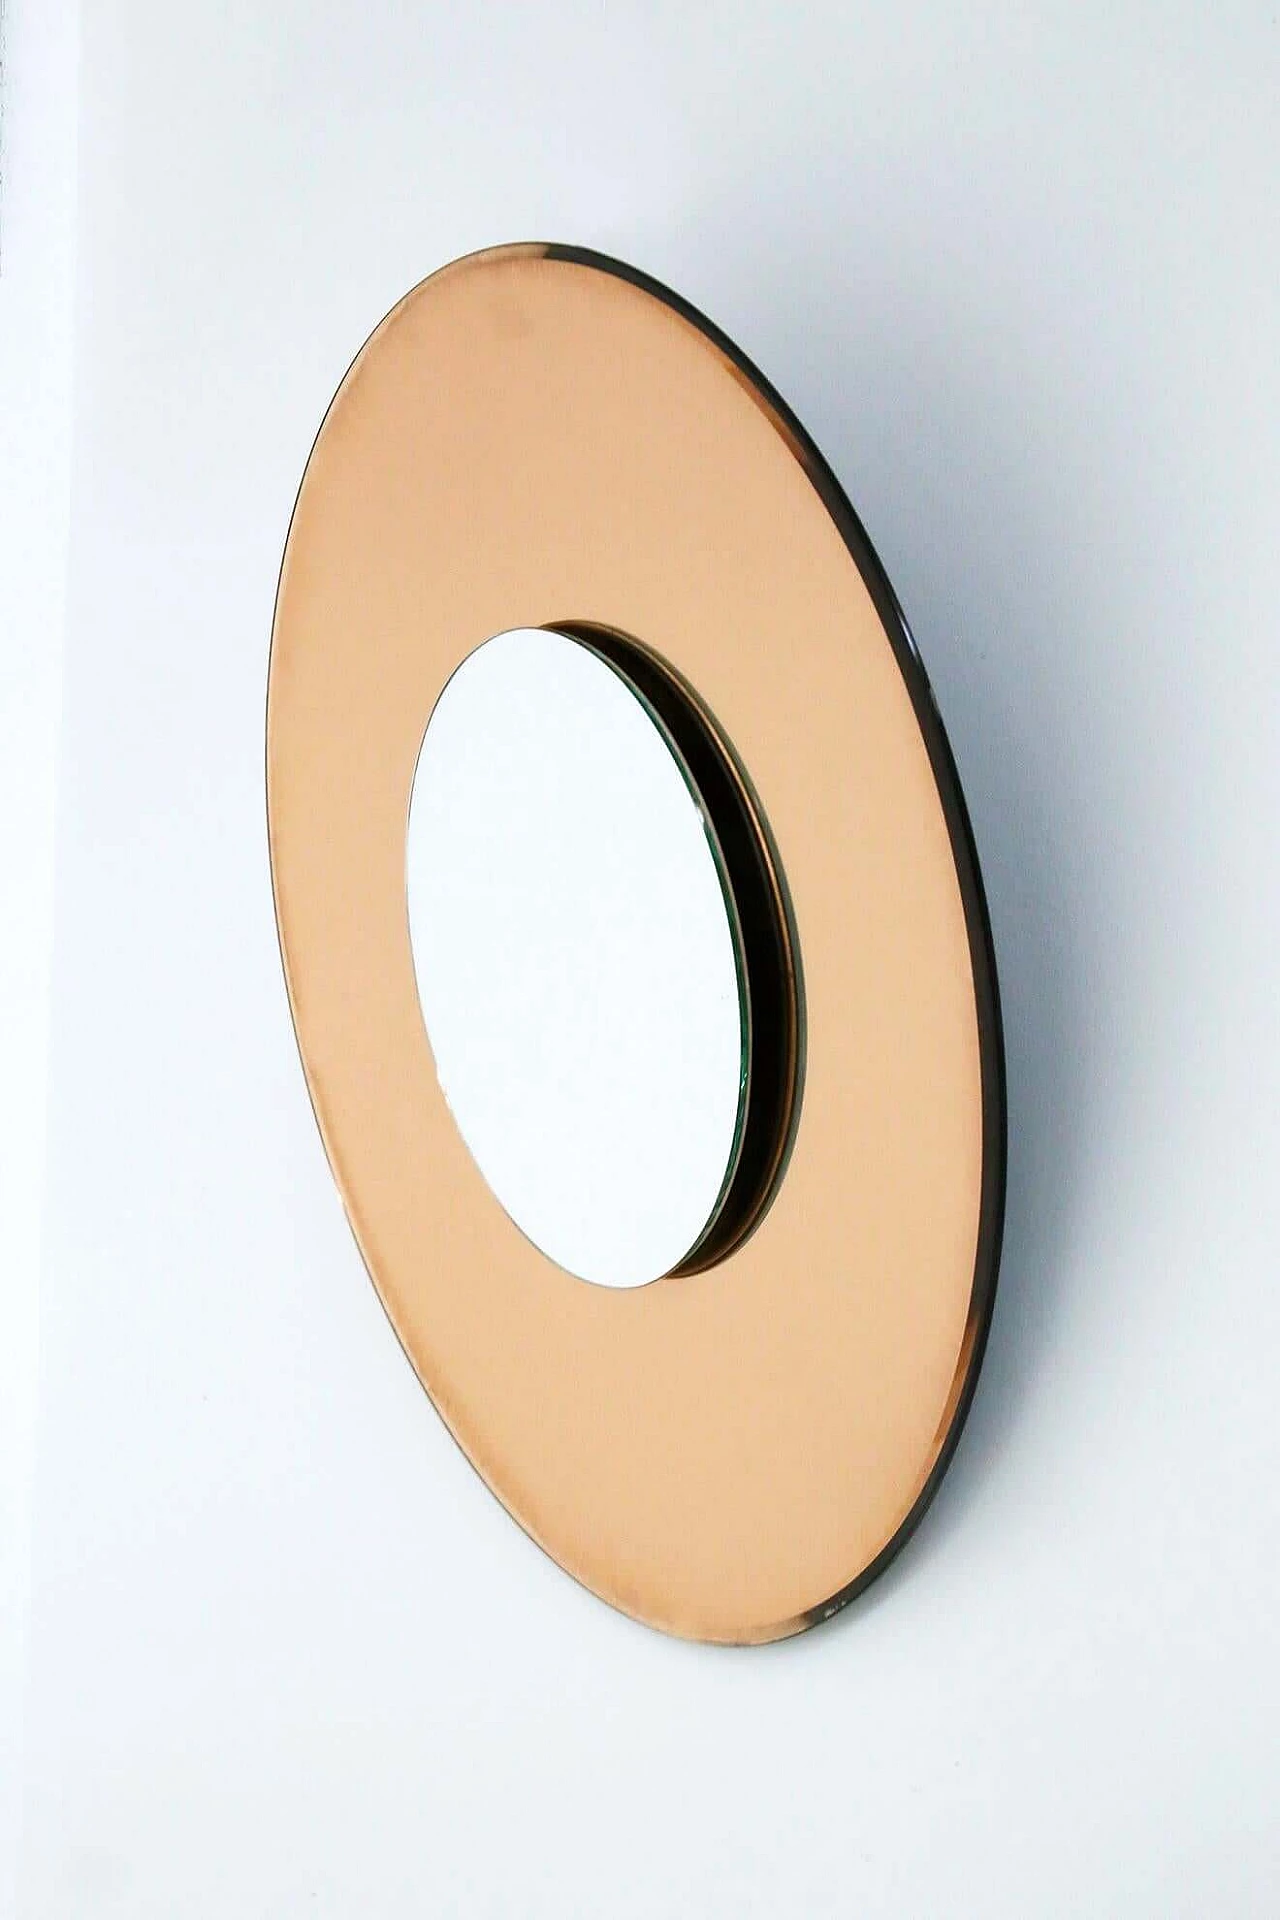 Round orange mirror in FontanaArte style by Effetto Vetro, 2000s 1387881